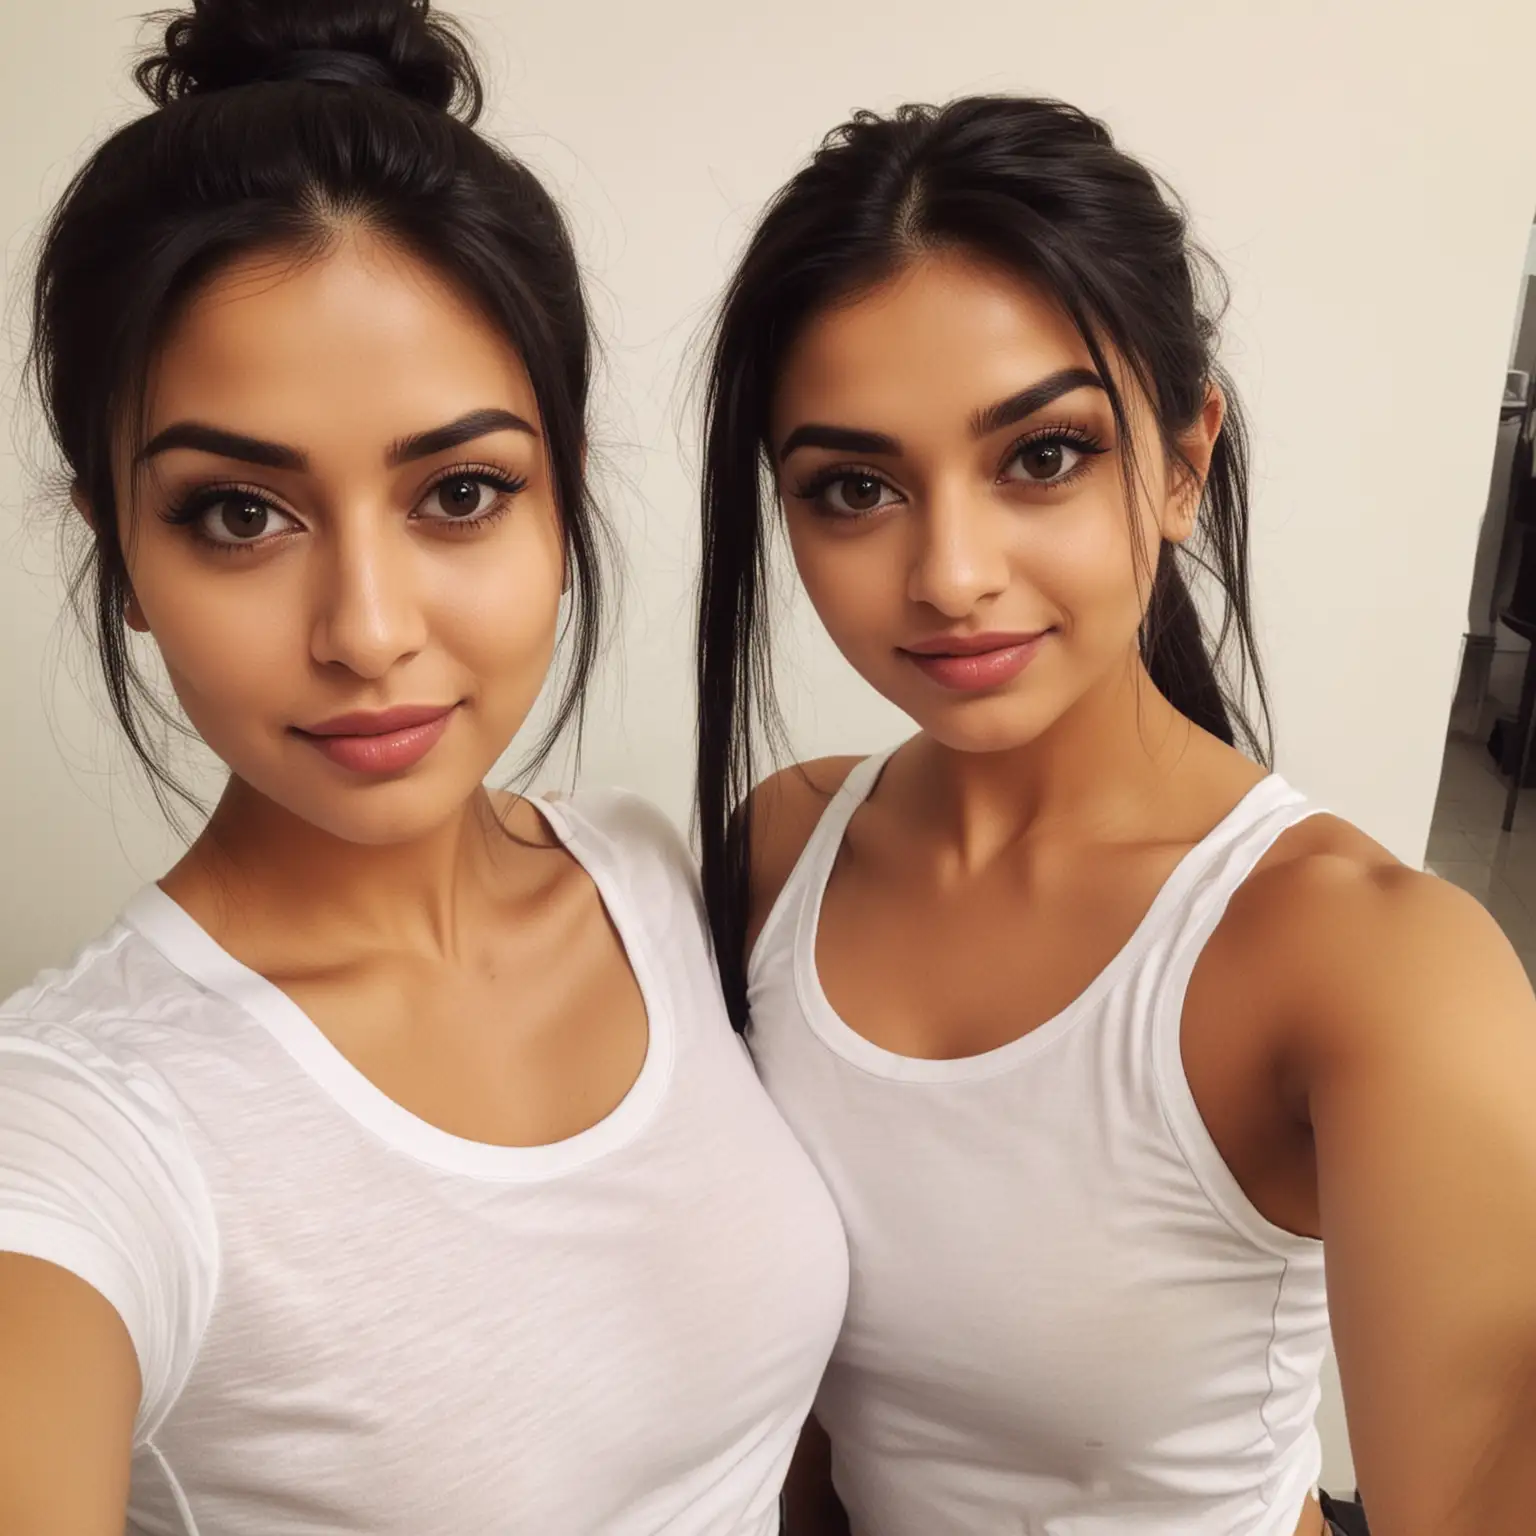 Flirtatious Selfie Erina Varma and Alika Mullbadi in Stylish Attire